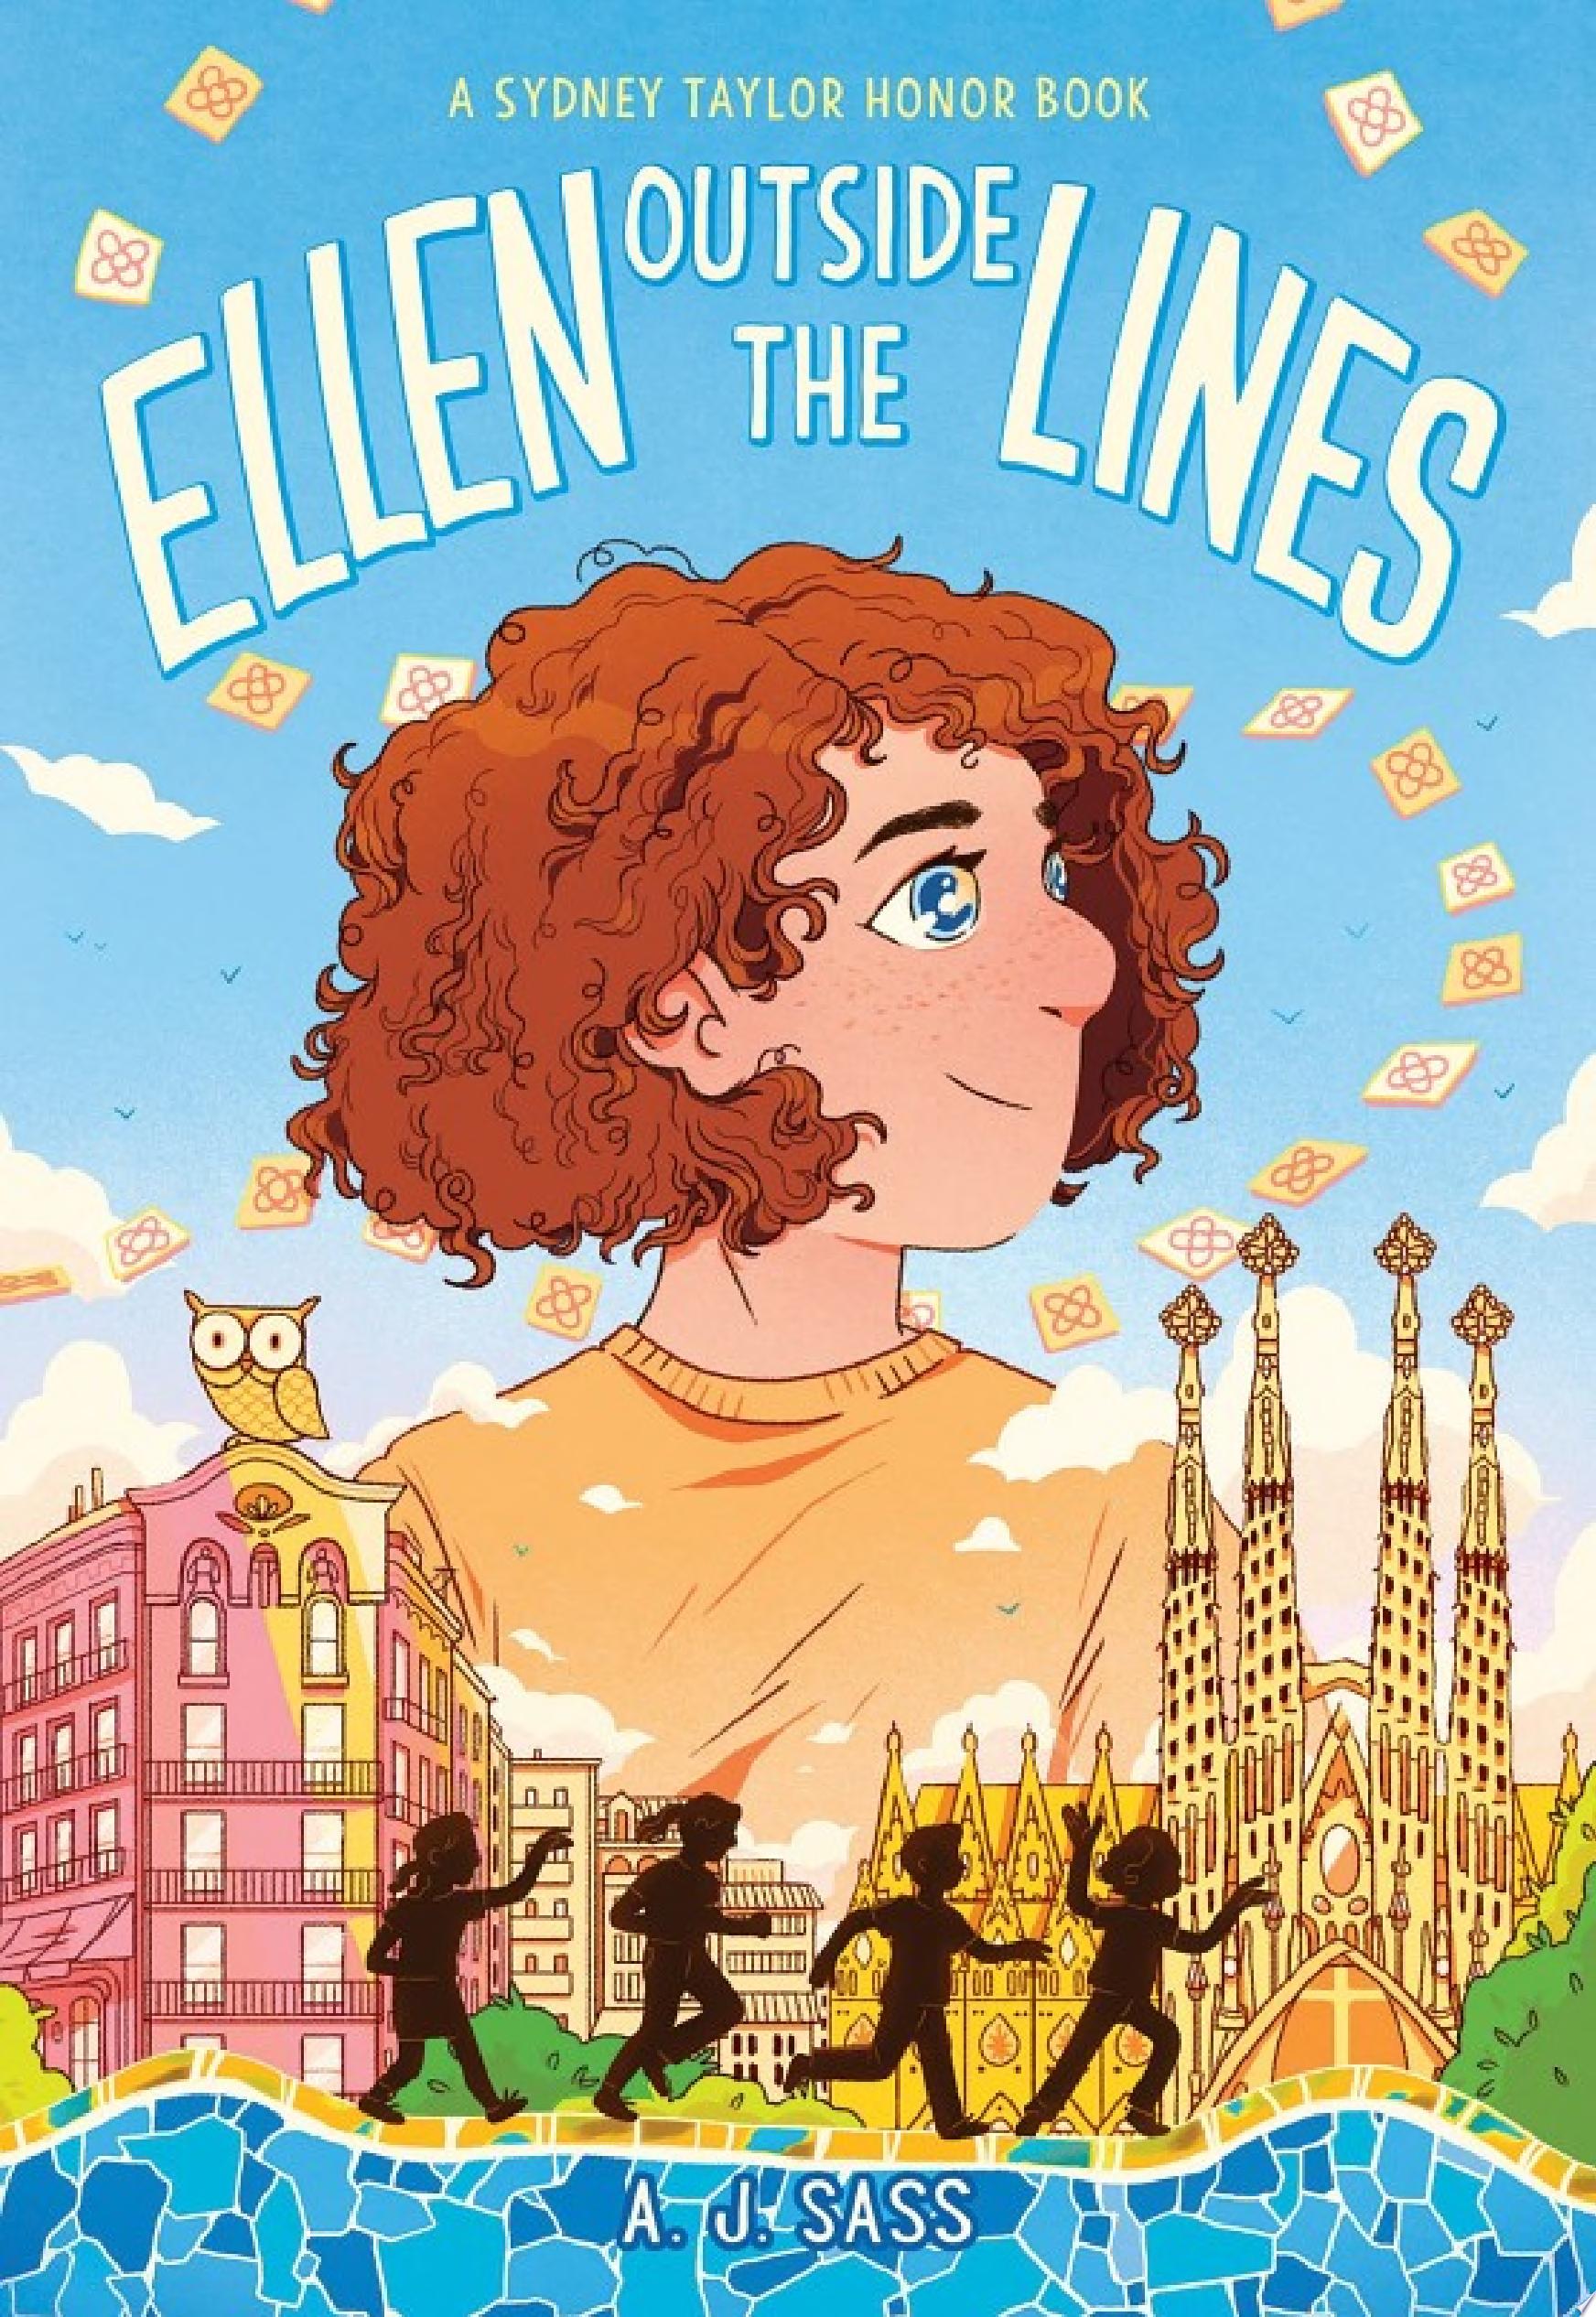 Image for "Ellen Outside the Lines"